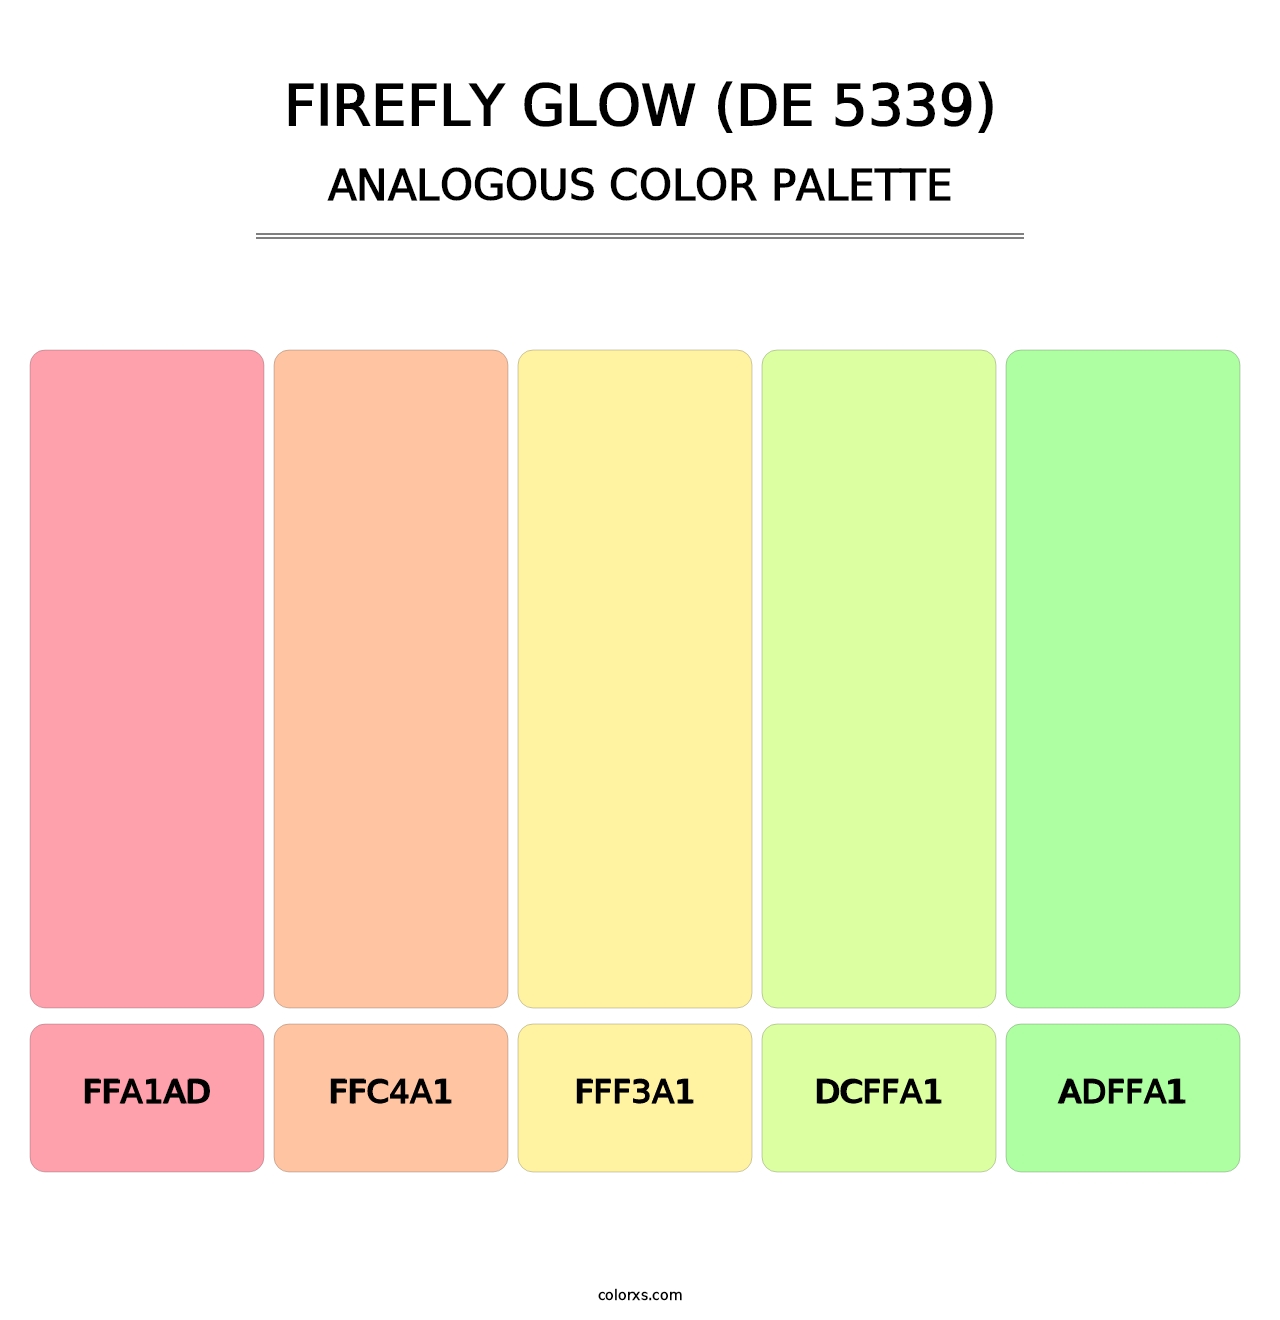 Firefly Glow (DE 5339) - Analogous Color Palette